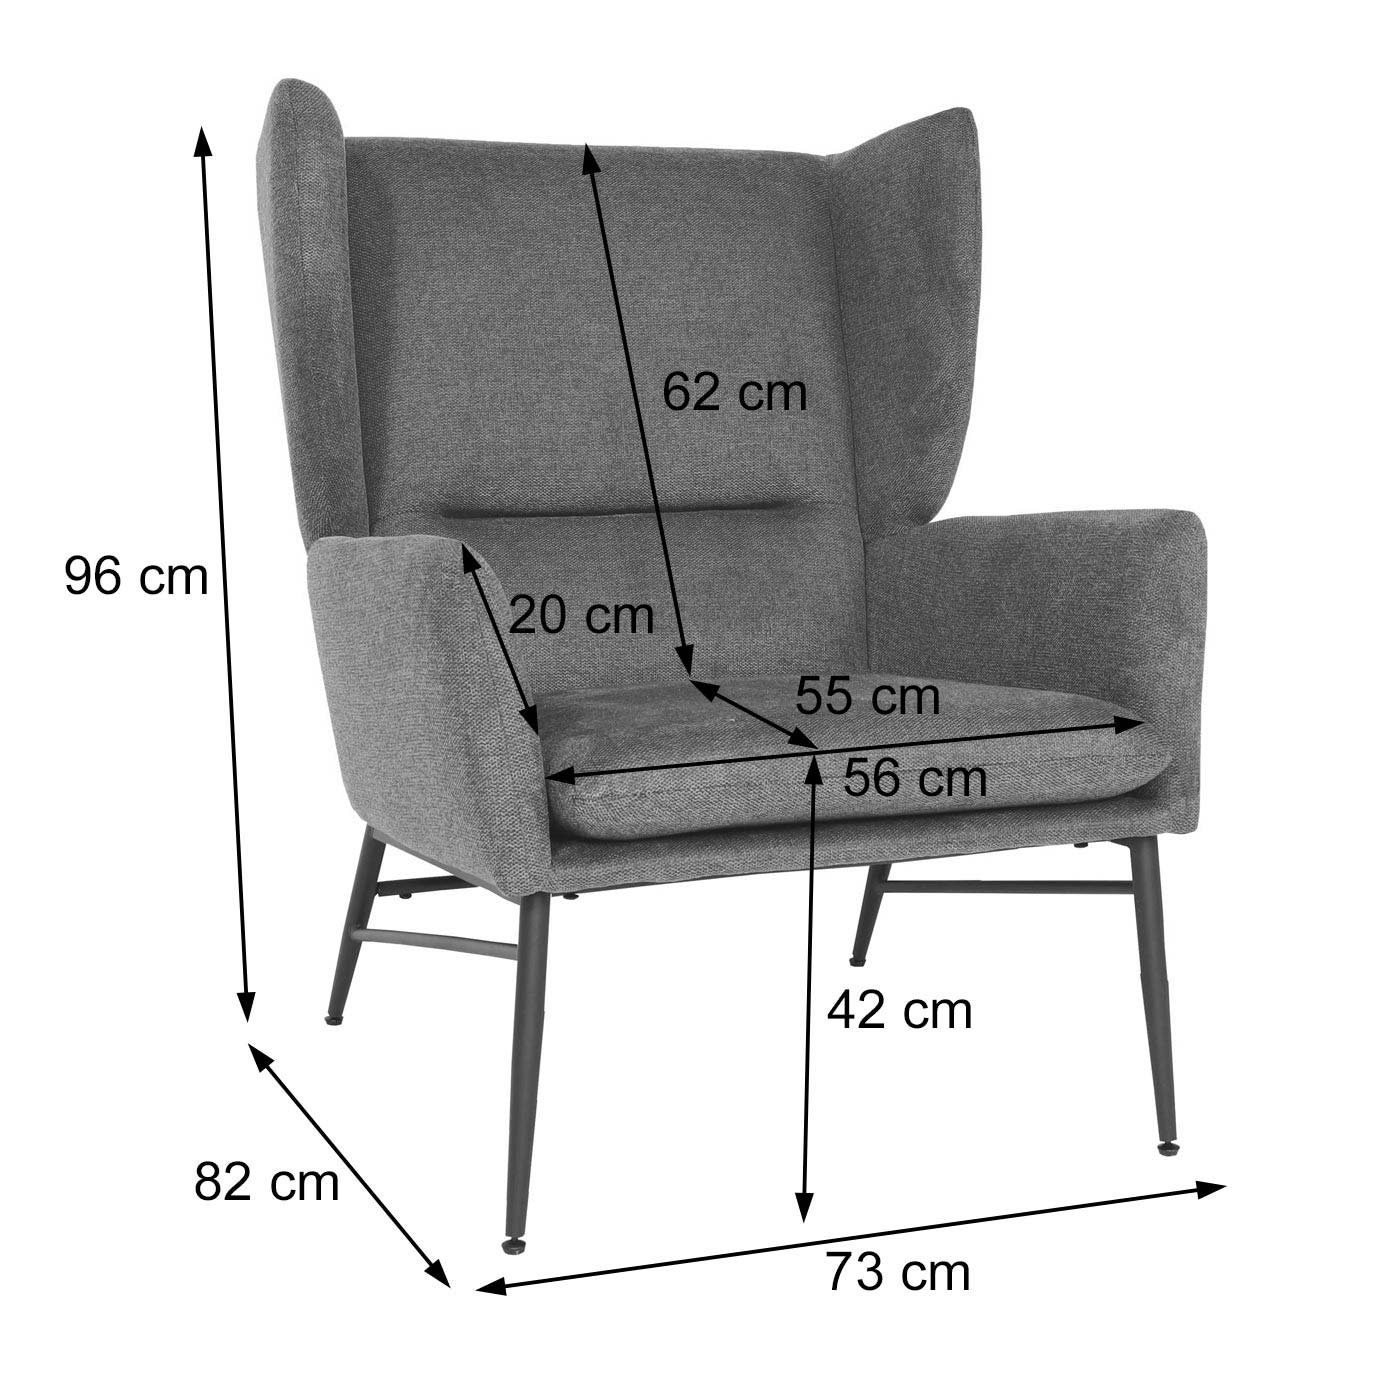 MCW Loungesessel MCW-L62, breite terracotta-braun Sitzfläche, Extra Sitzkissen abnehmbar